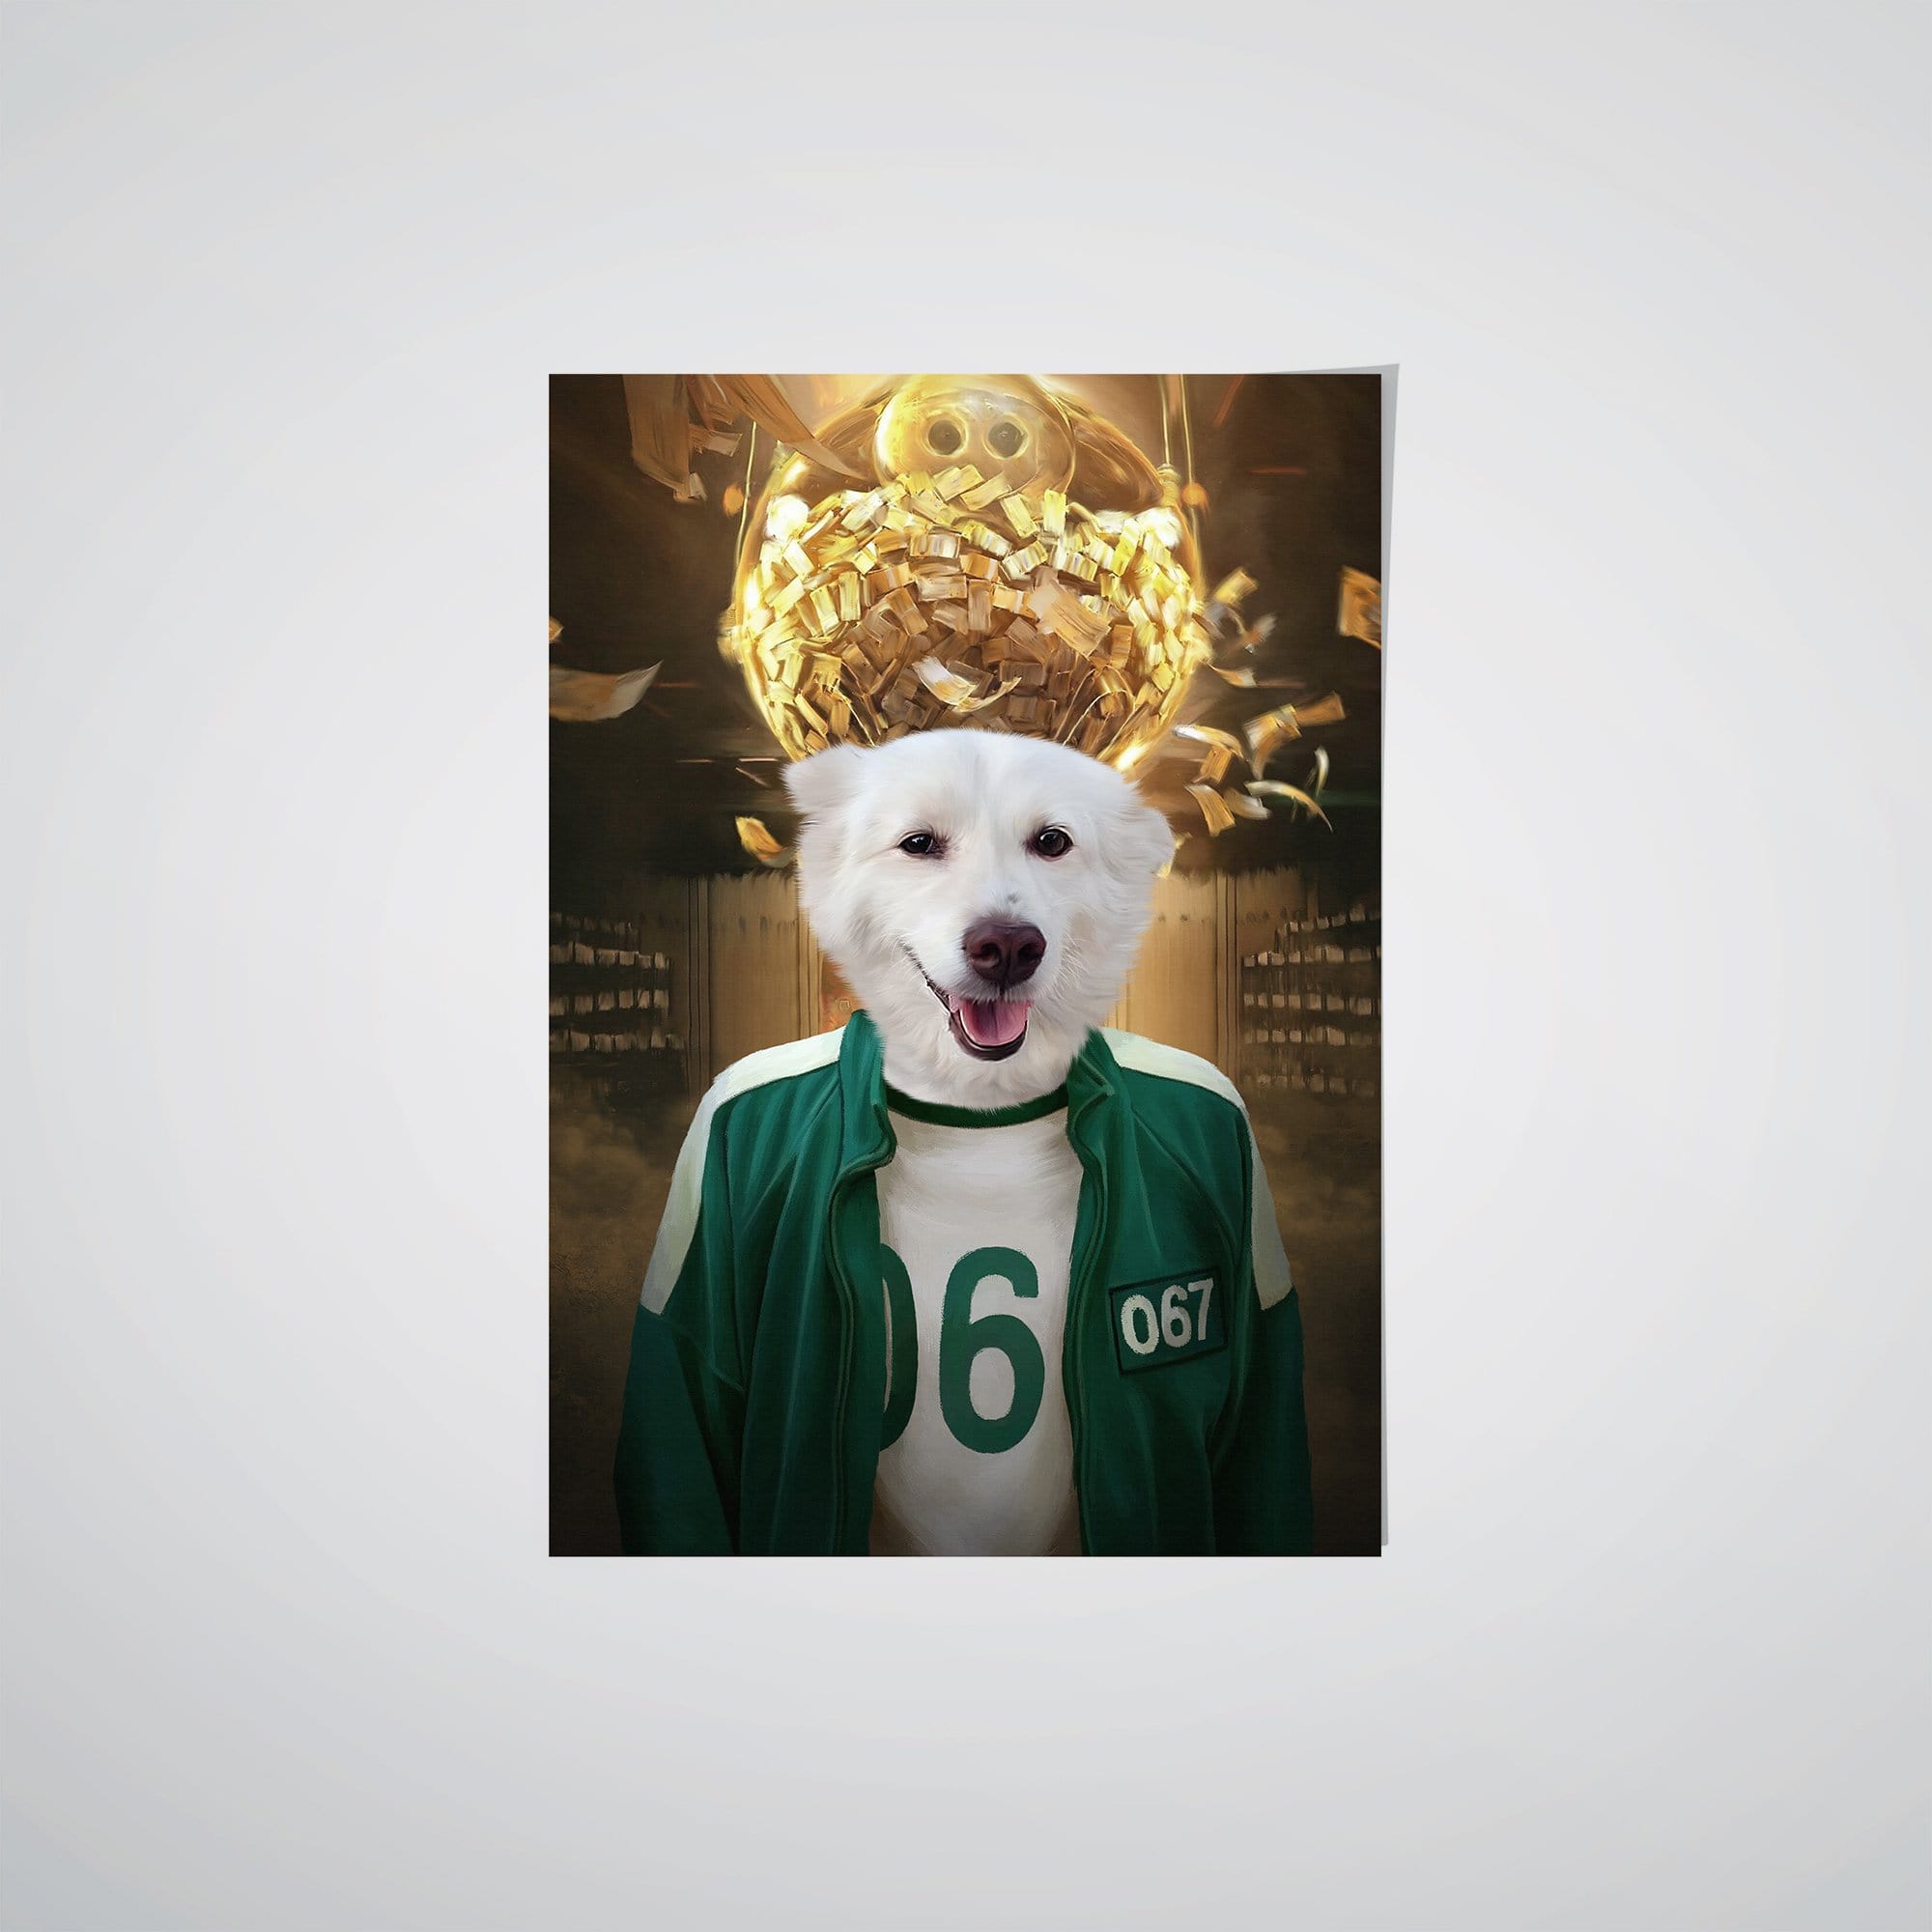 Player 067 - Custom Pet Poster